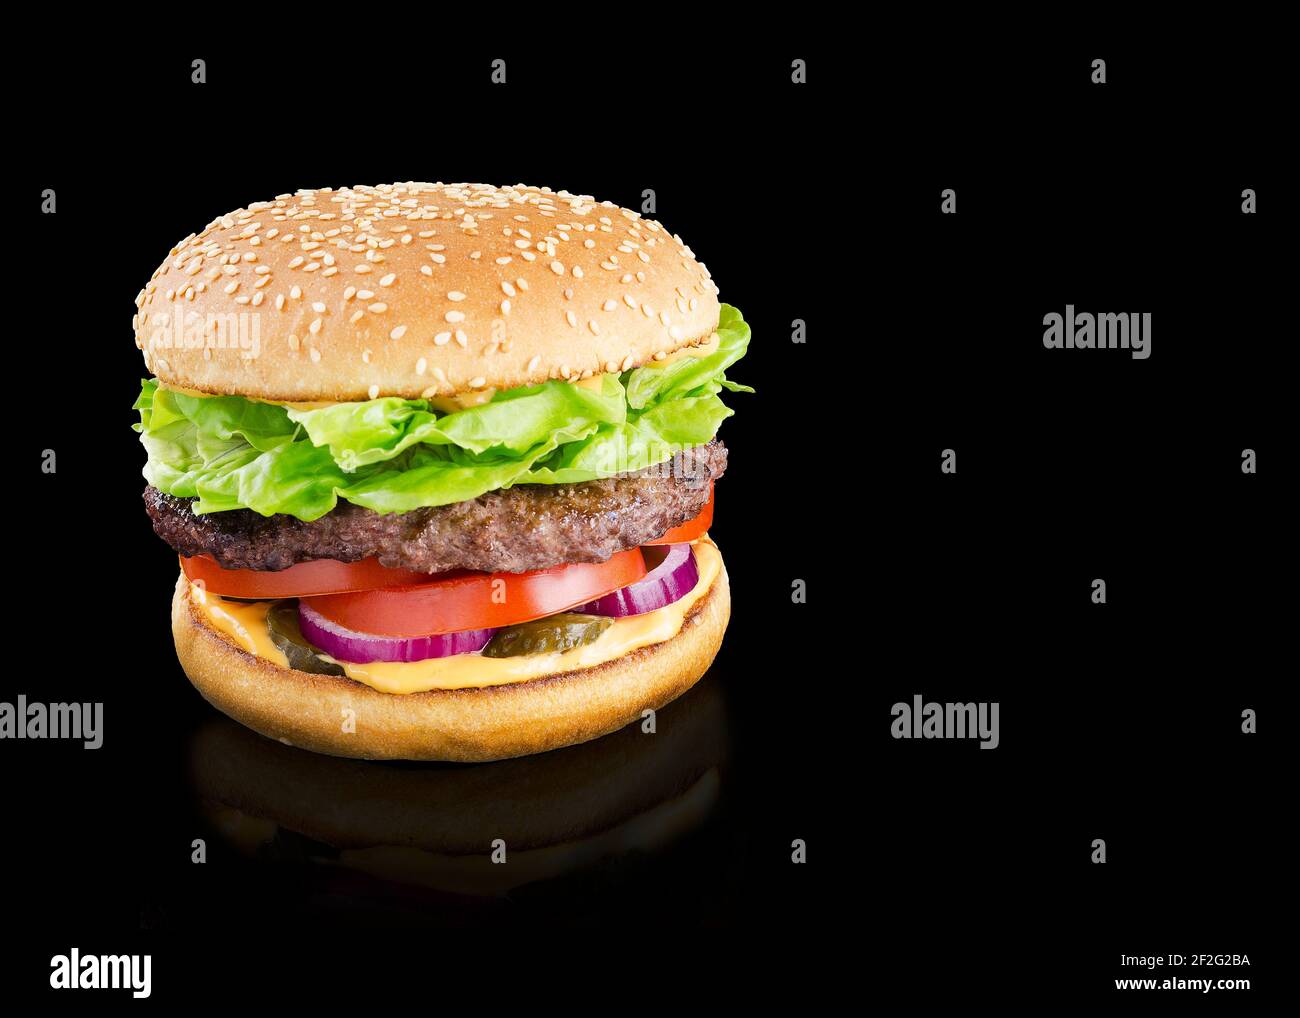 appetizing burger on a black background Stock Photo